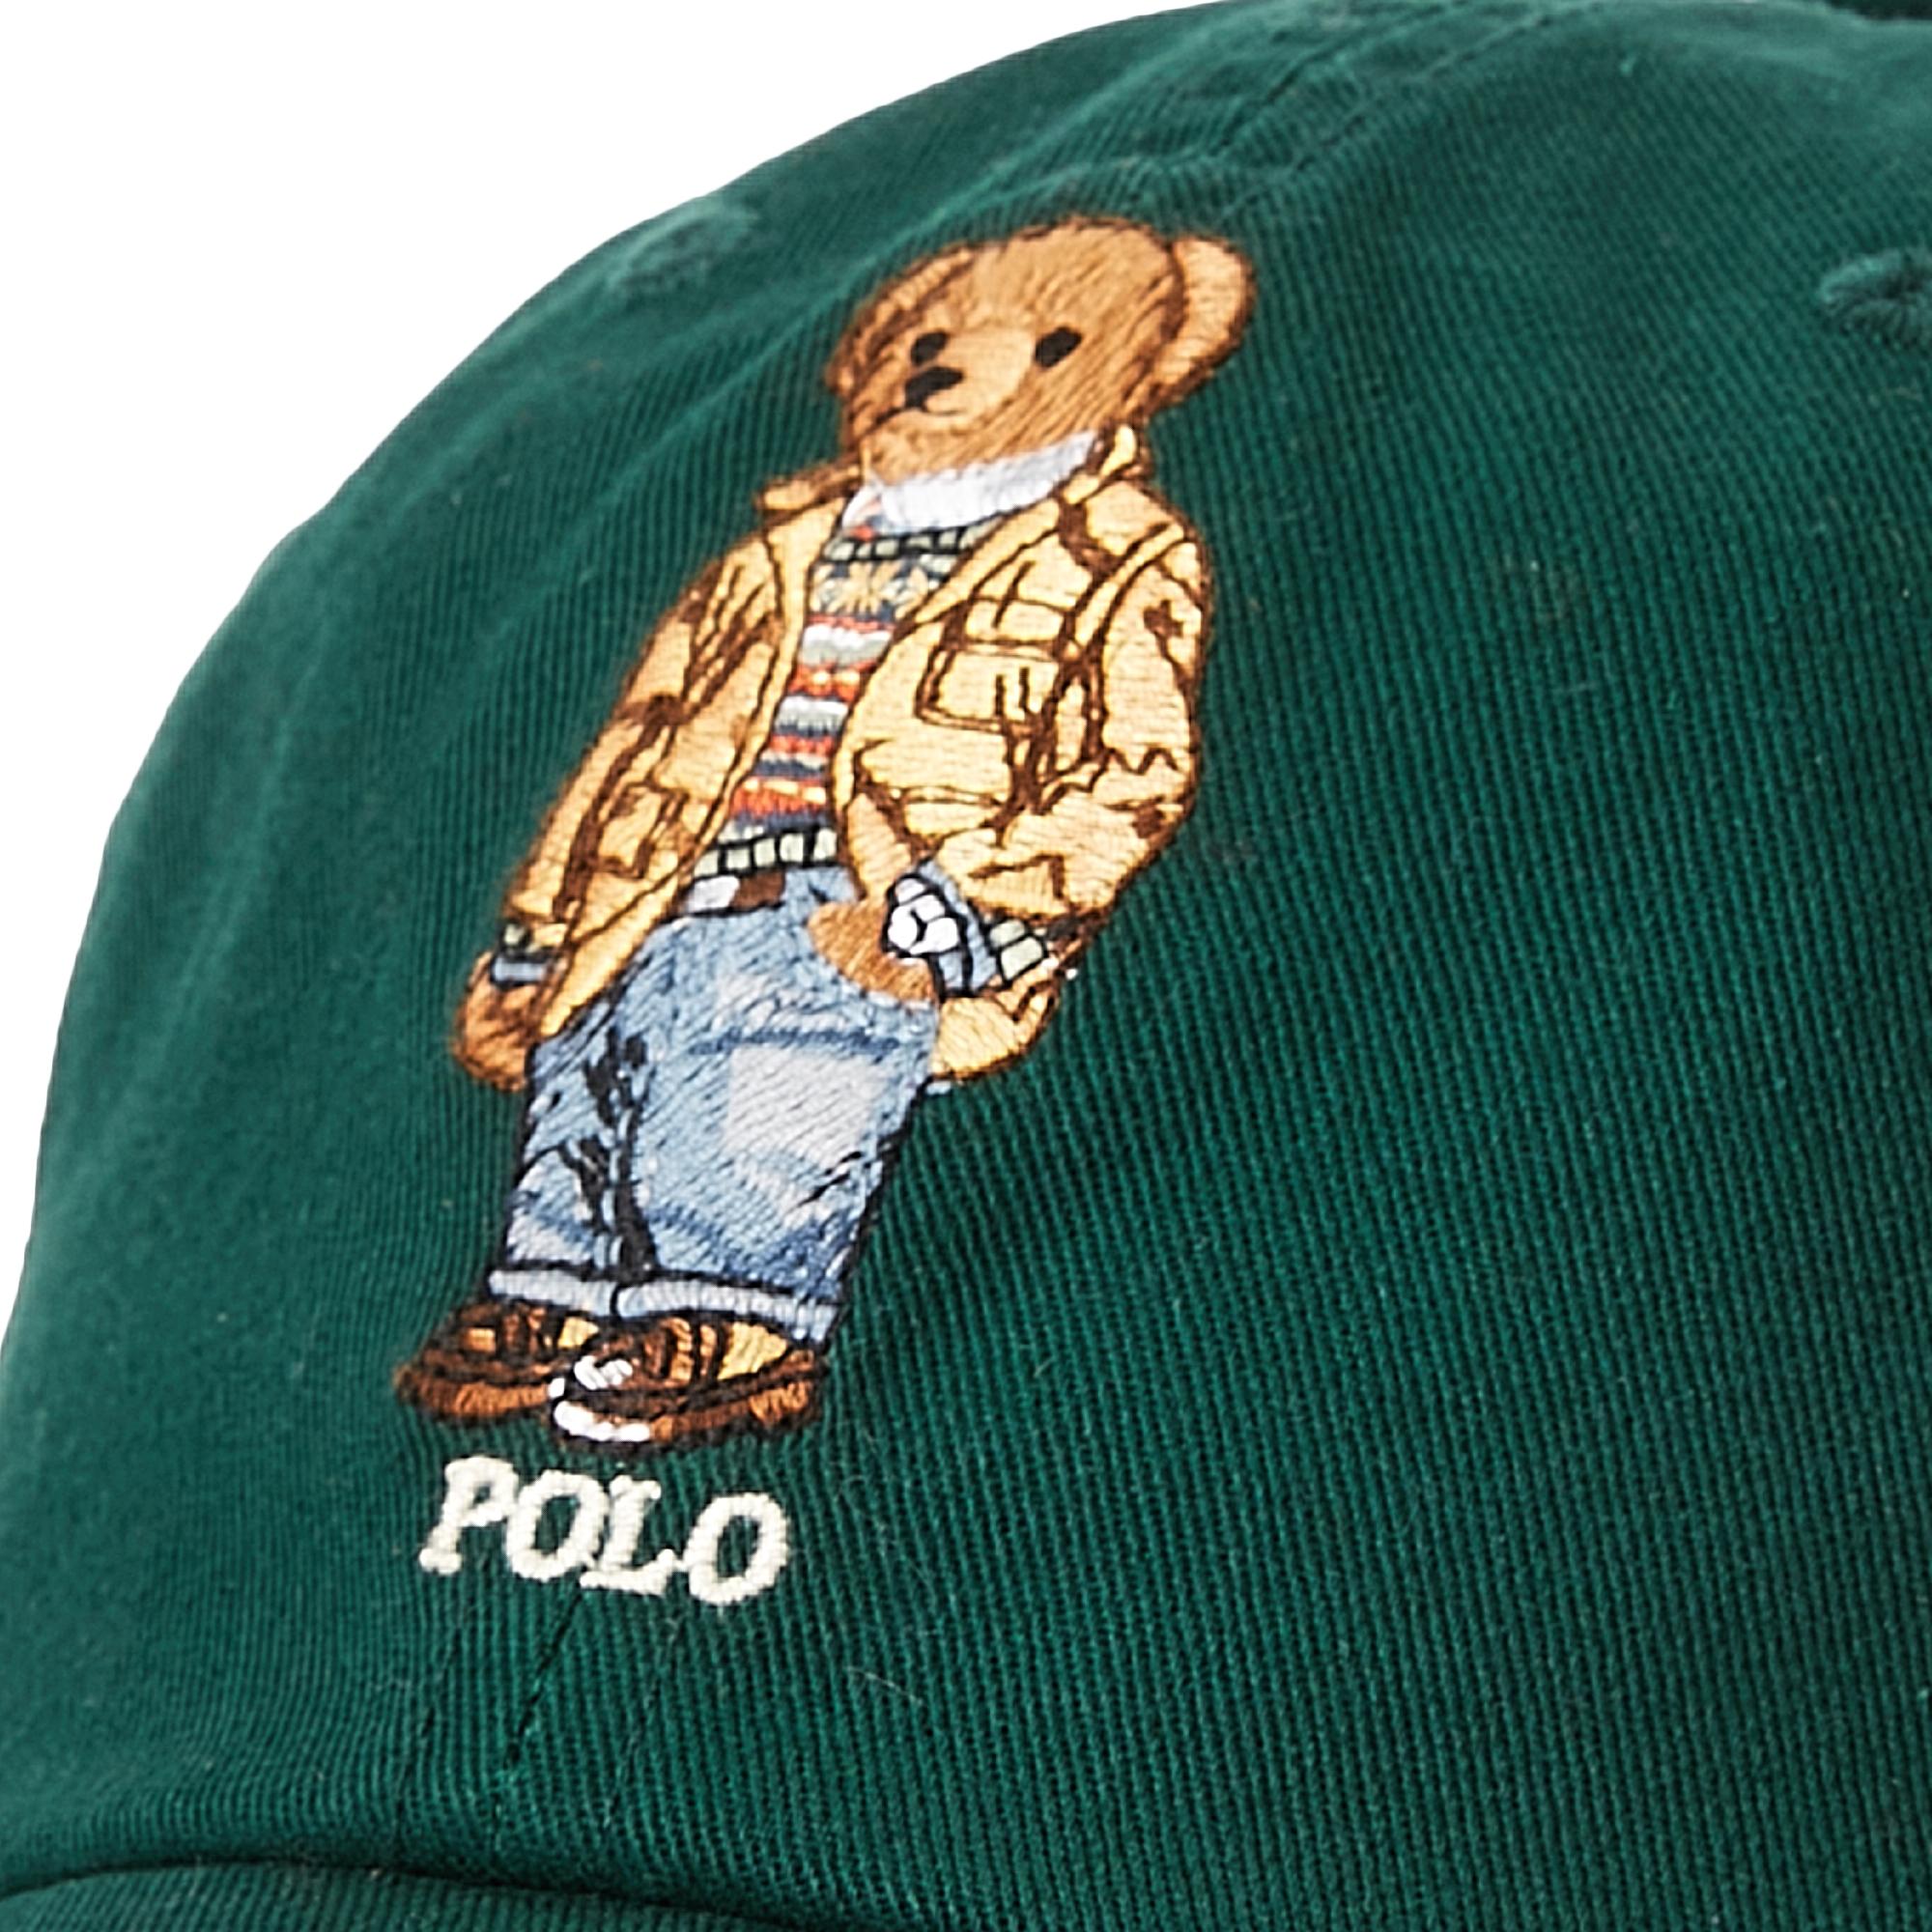 Ralph Lauren Cotton Polo Bear Chino Ball Cap in Green for Men - Lyst